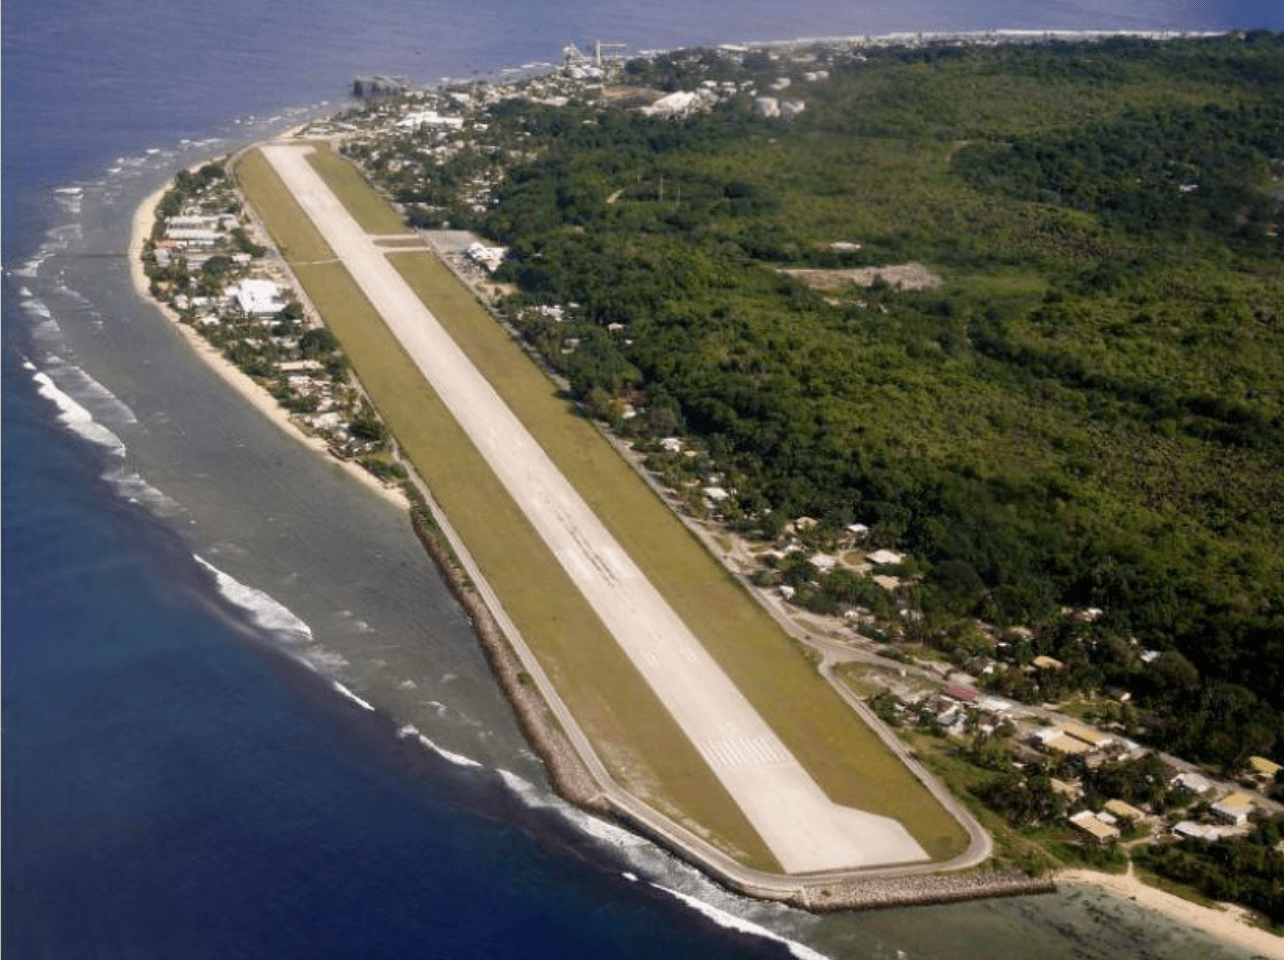 The Misunderstood Republic of Nauru